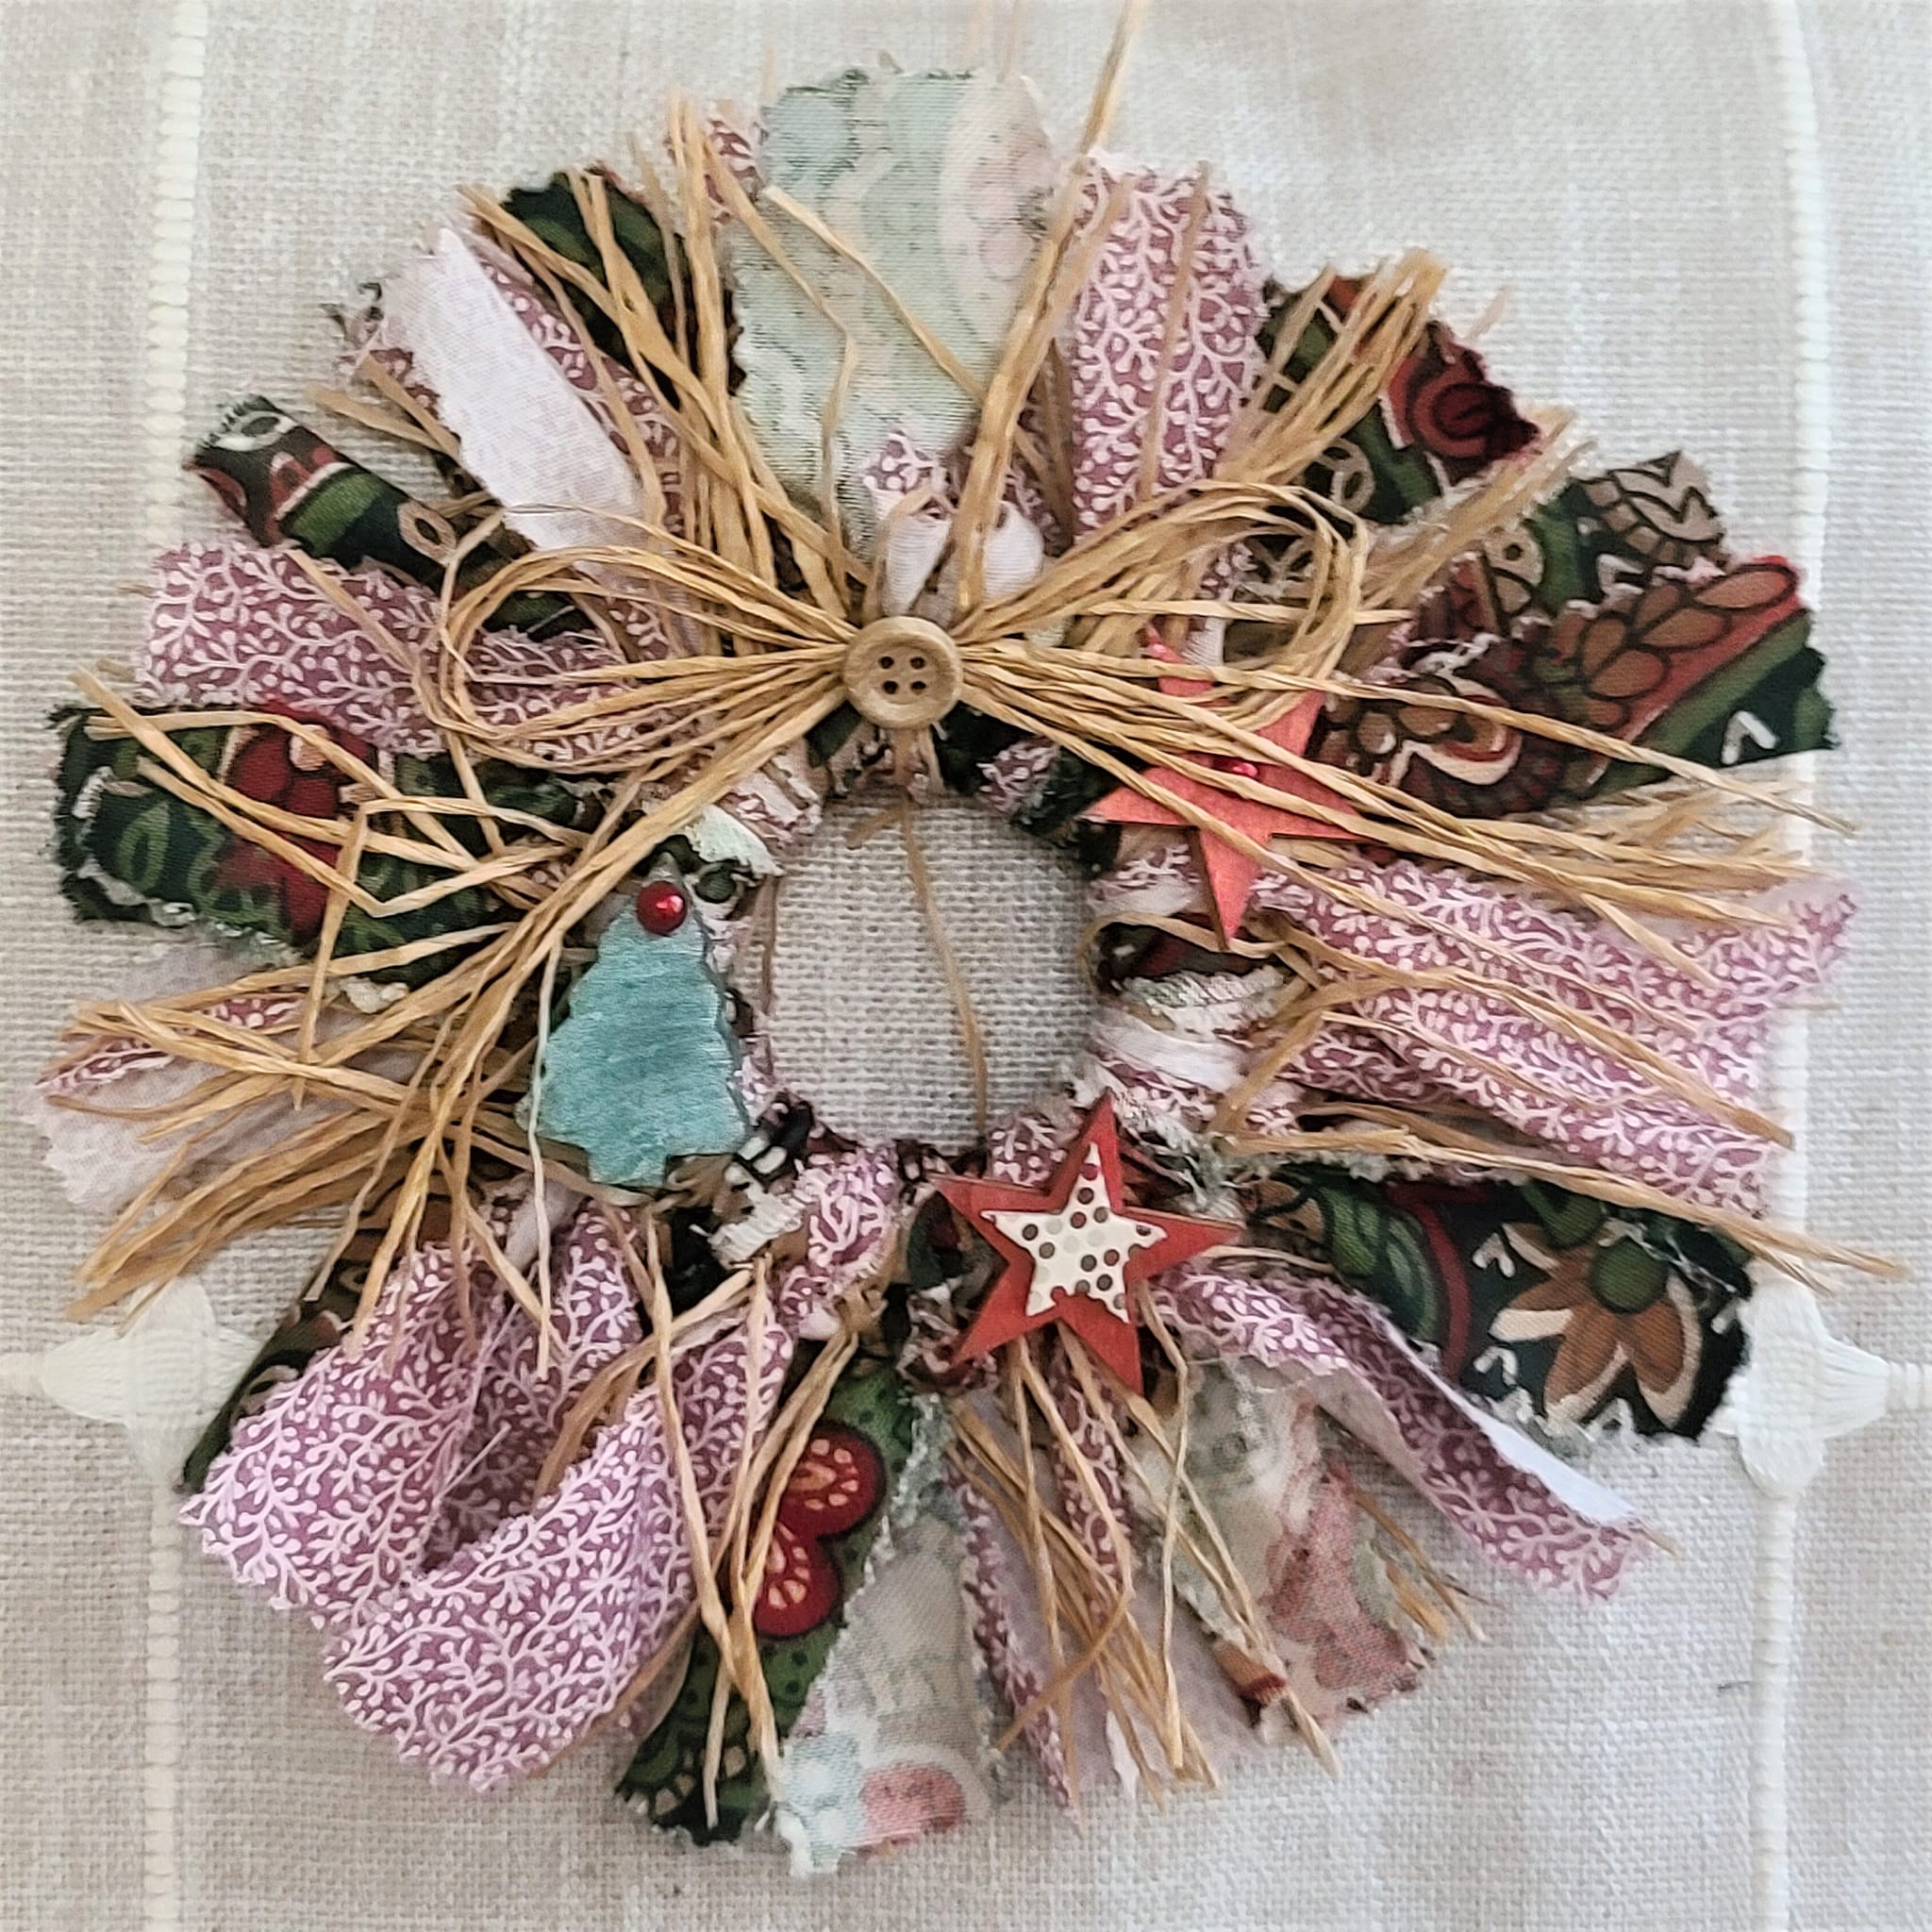 Mini wreath ornament 7" rag wreath country rustic style